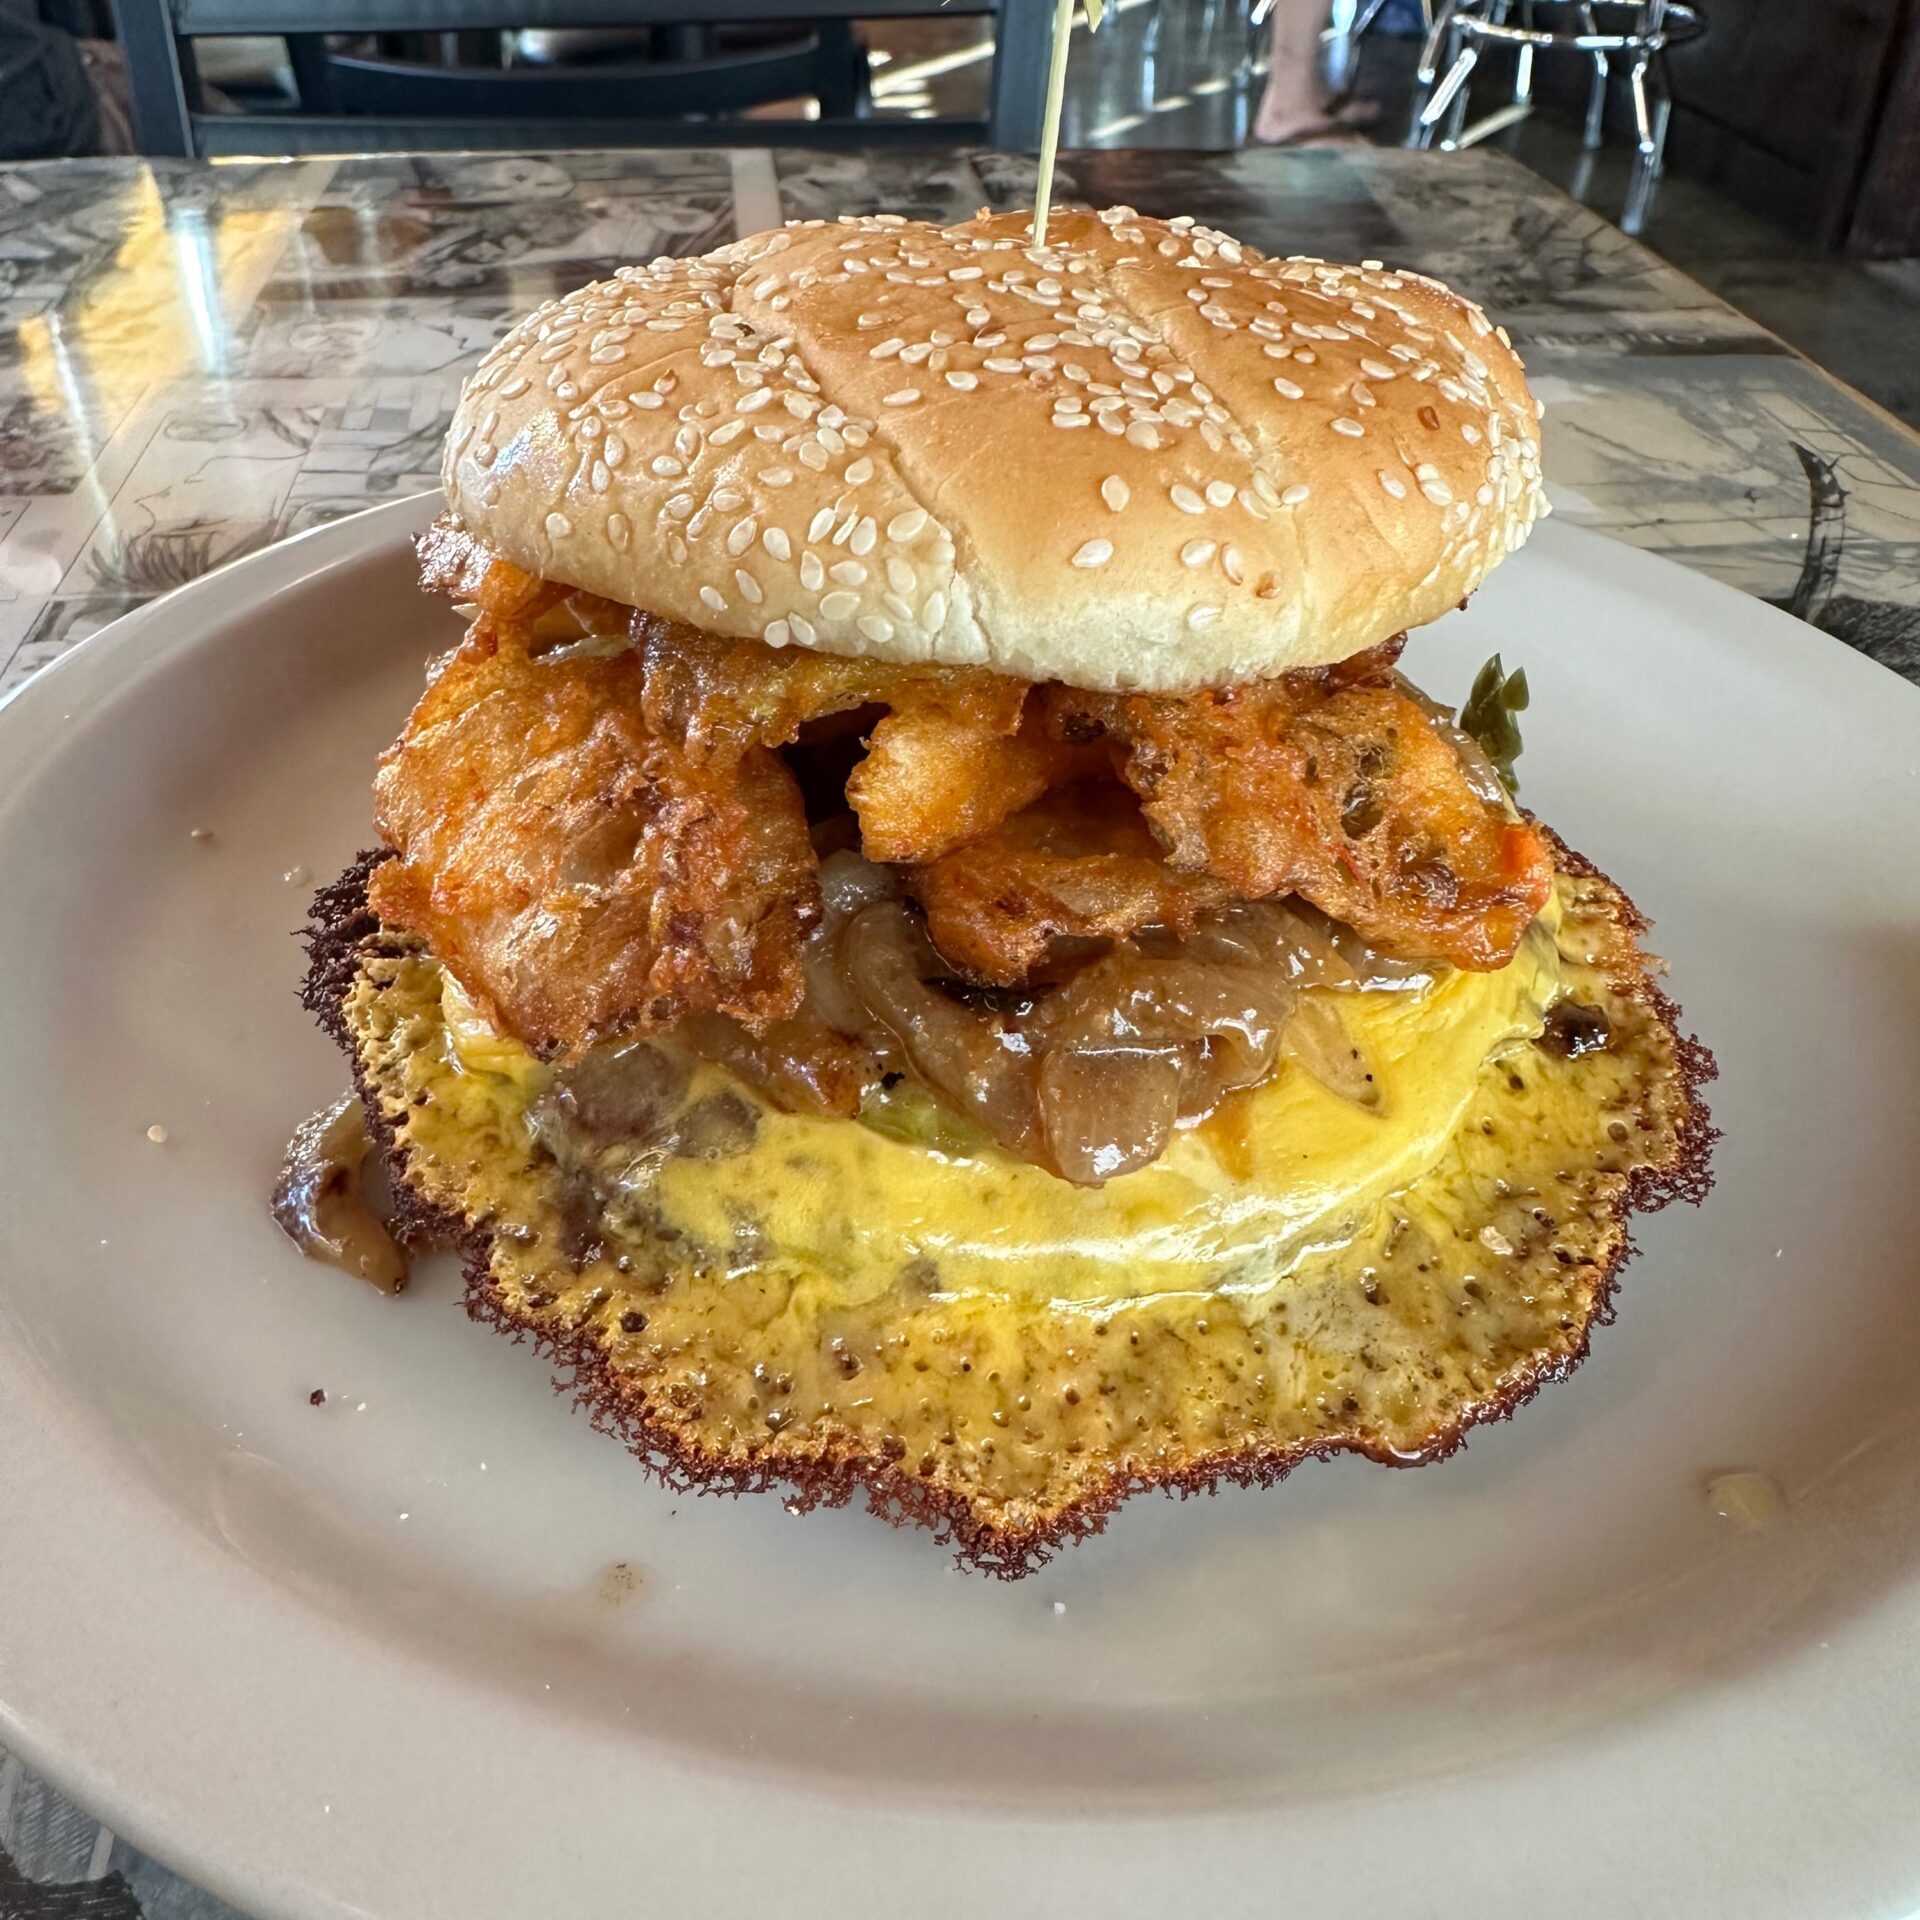 Shaku-burger-hungryb_in_portland-1-1370